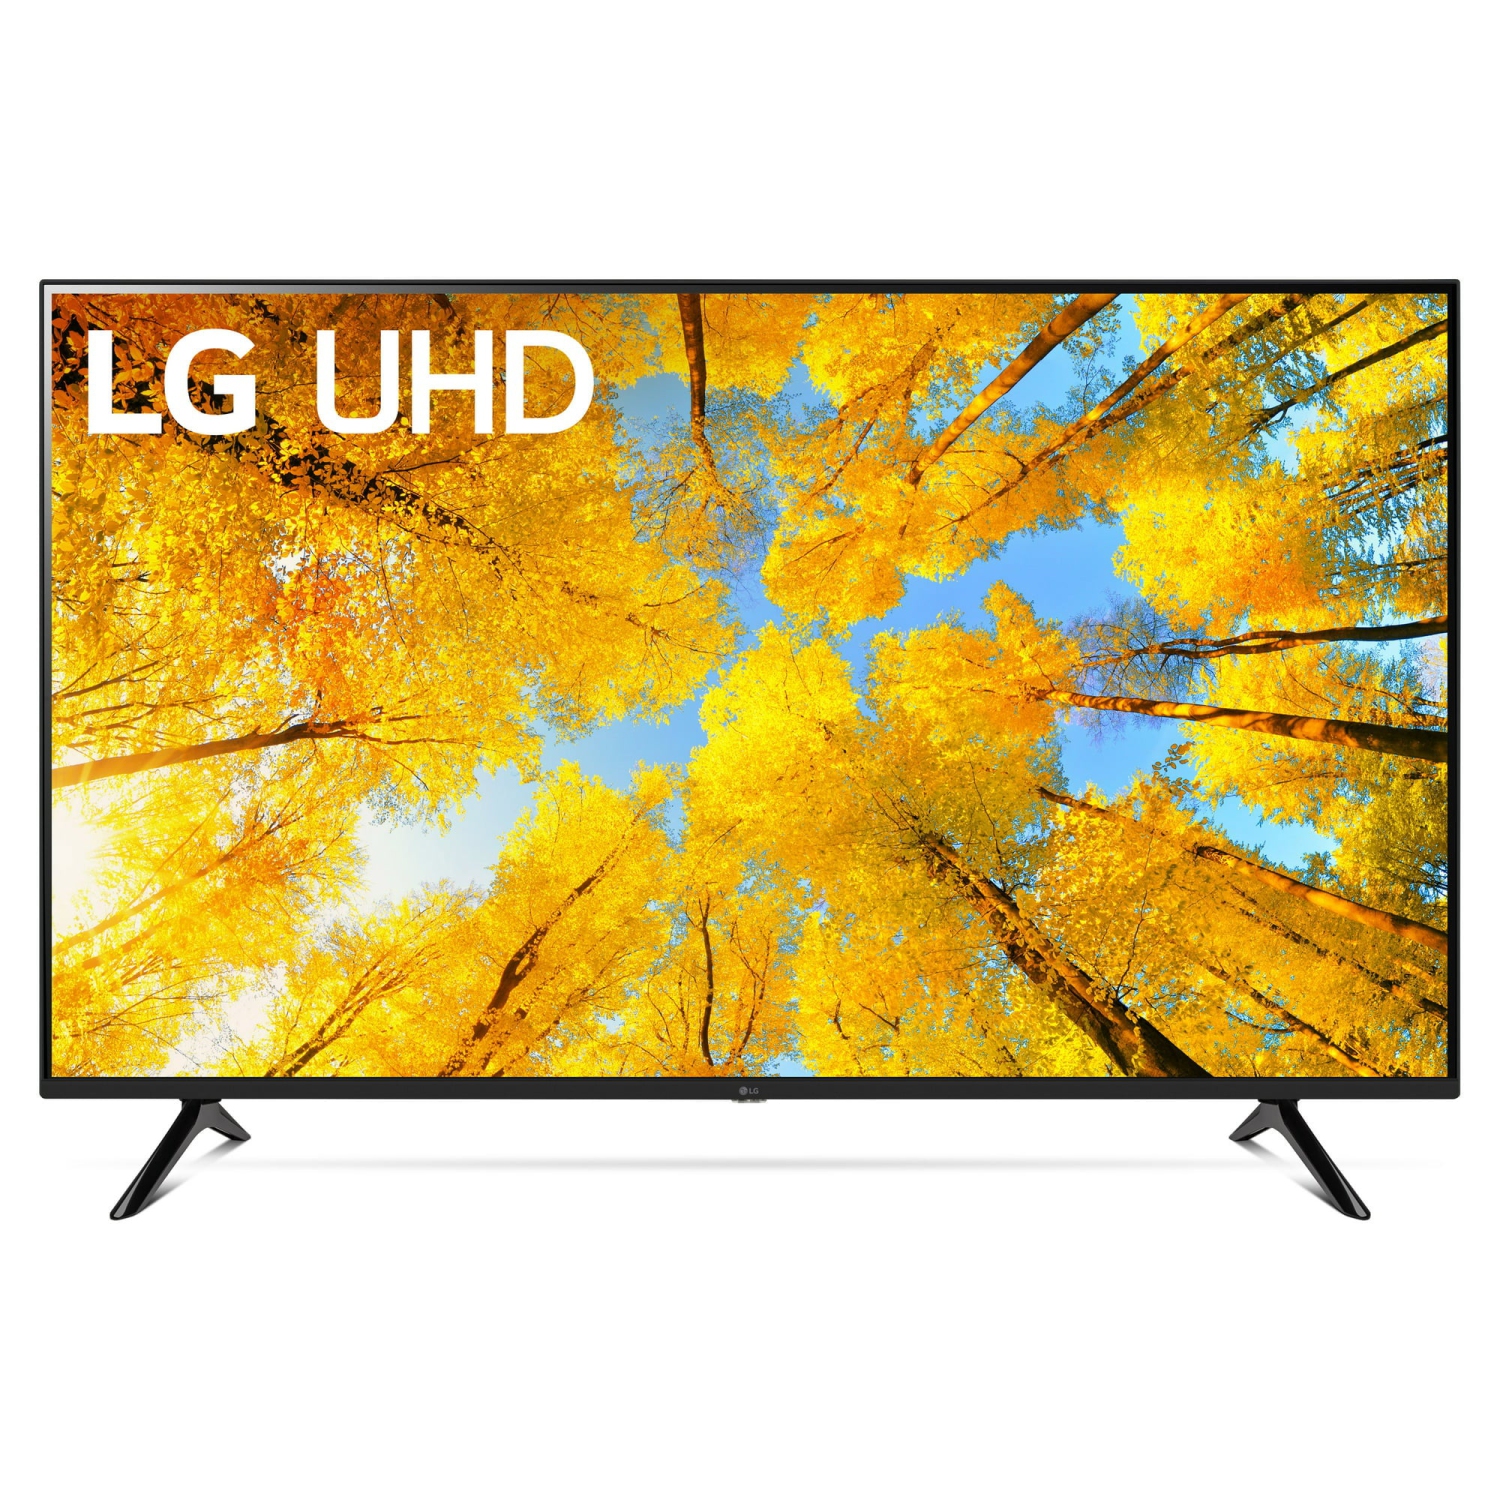 REFURBISHED (GOOD) - LG 65" Class 4K UHD 2160P WebOS Smart TV with Active HDR UQ7570 Series (65UQ7570PUJ)